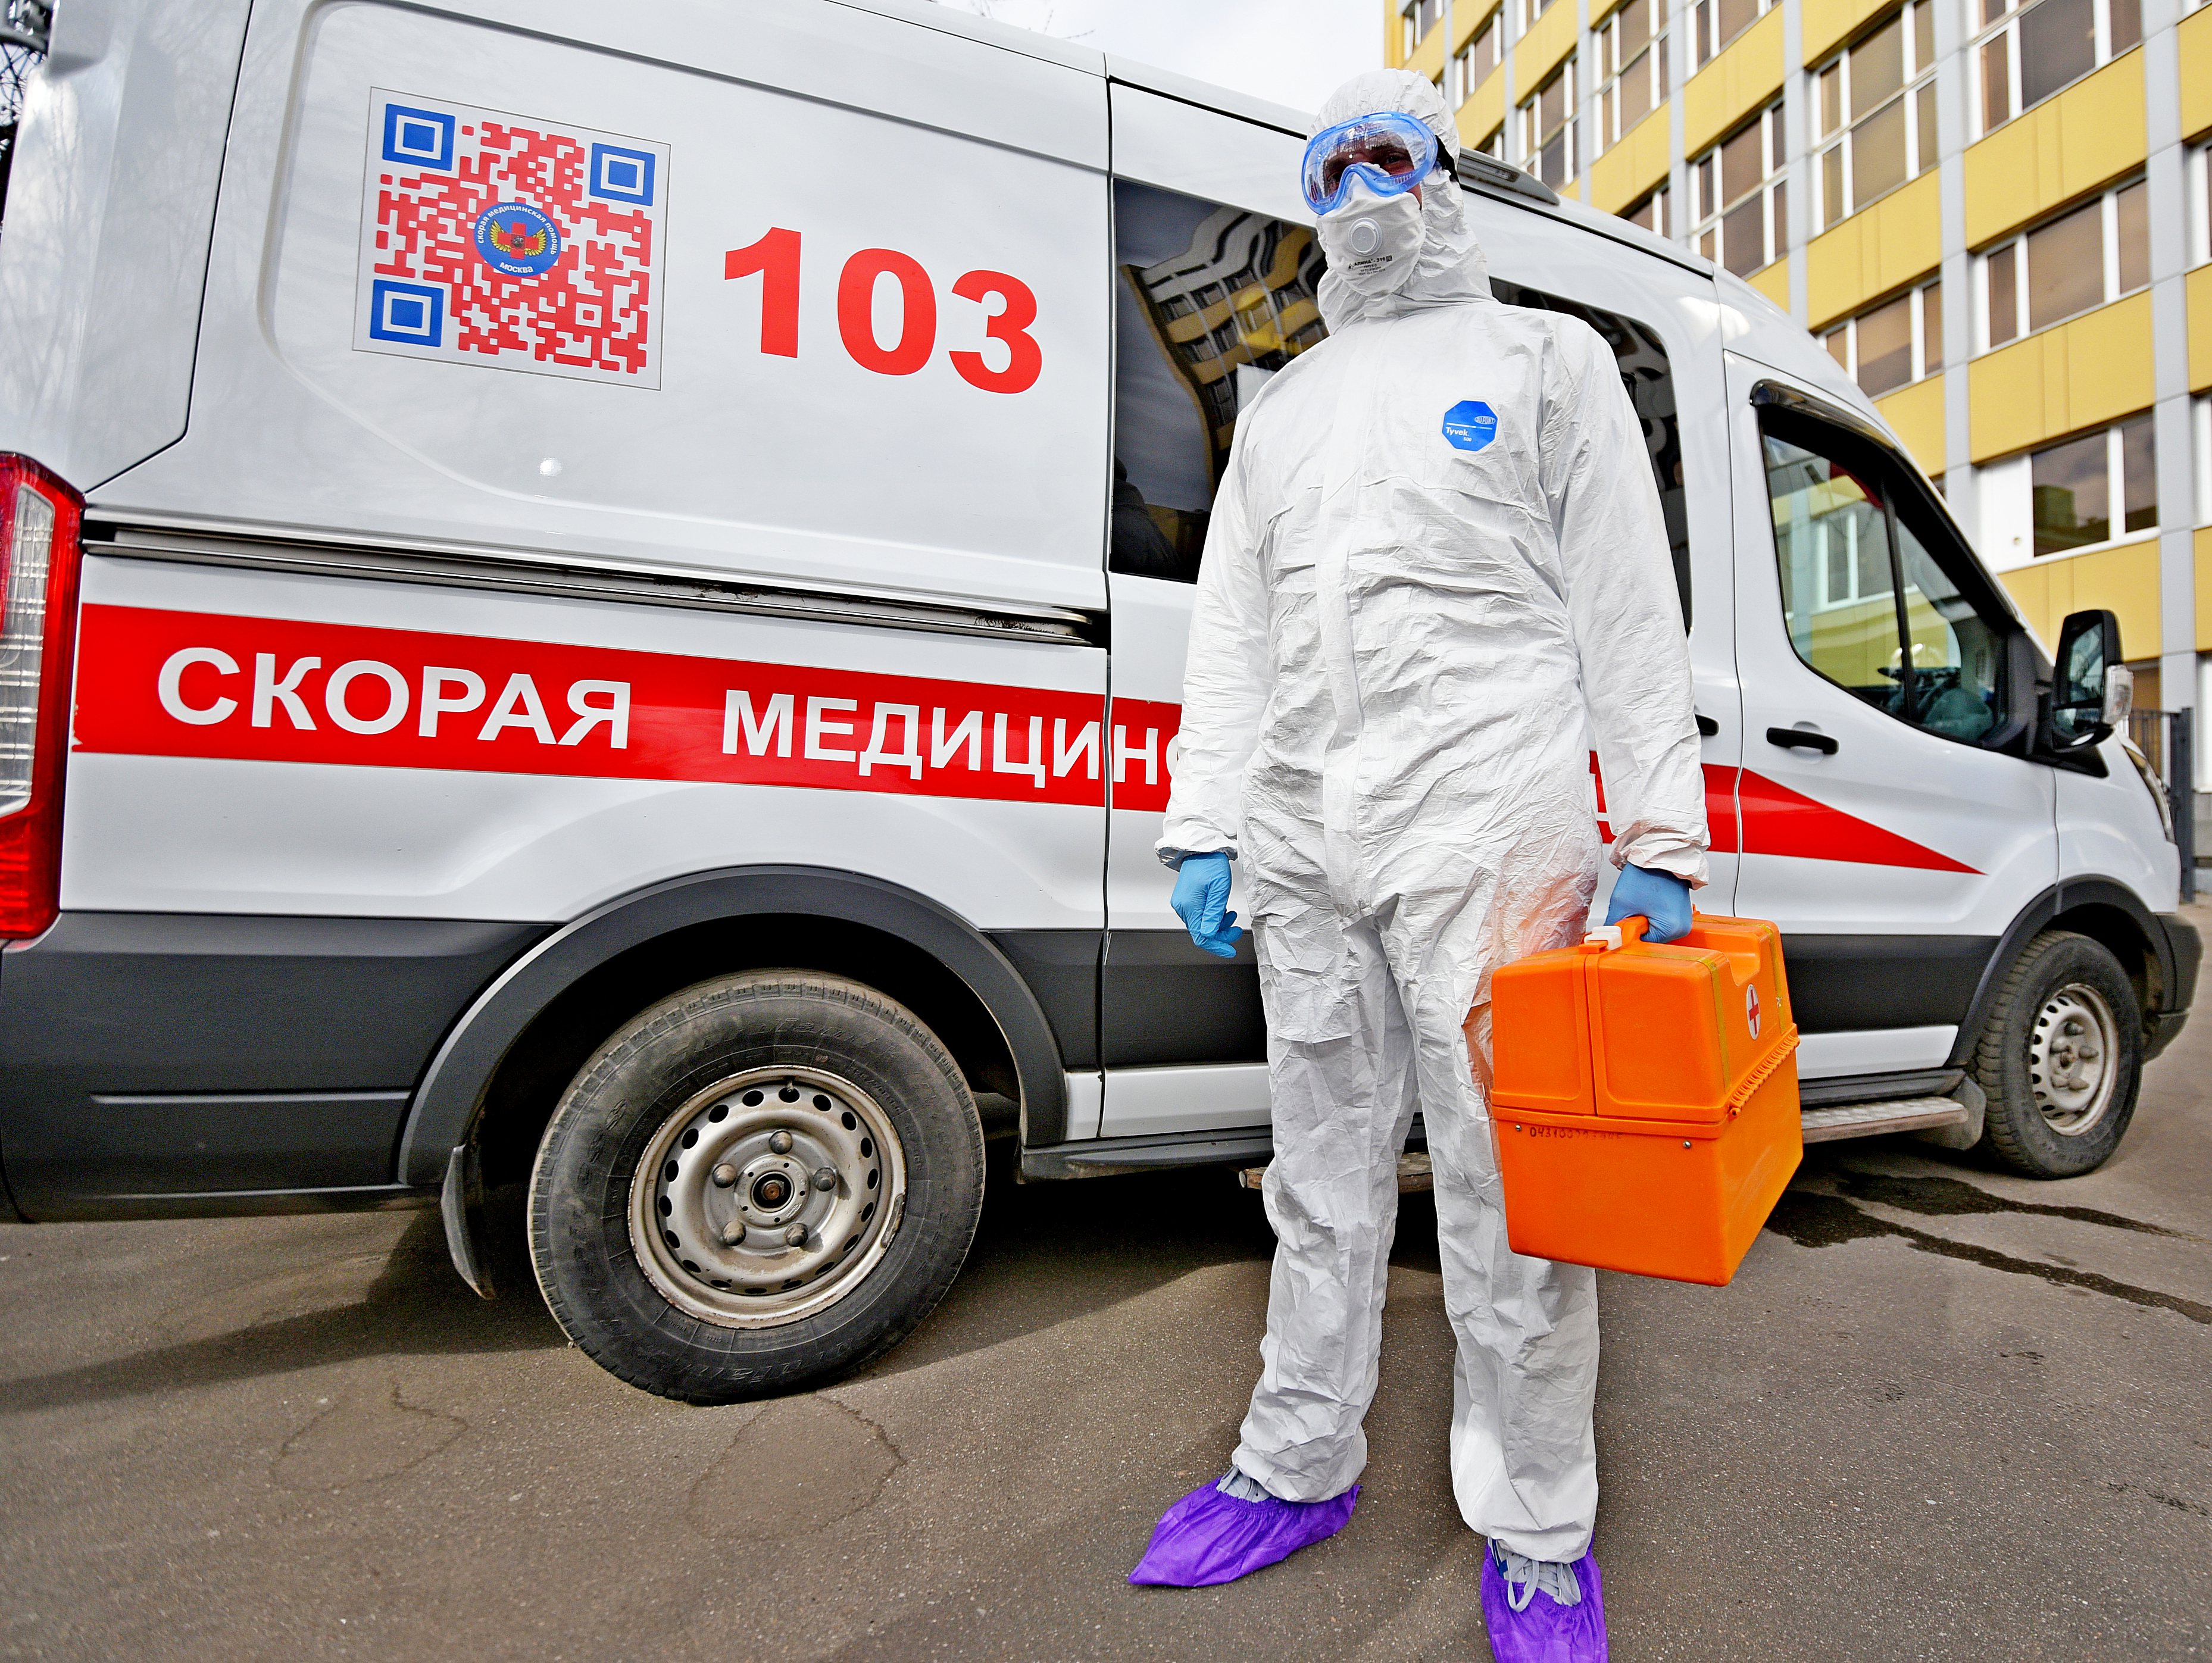 Московские врачи нашли почти 700 носителей коронавируса за сутки